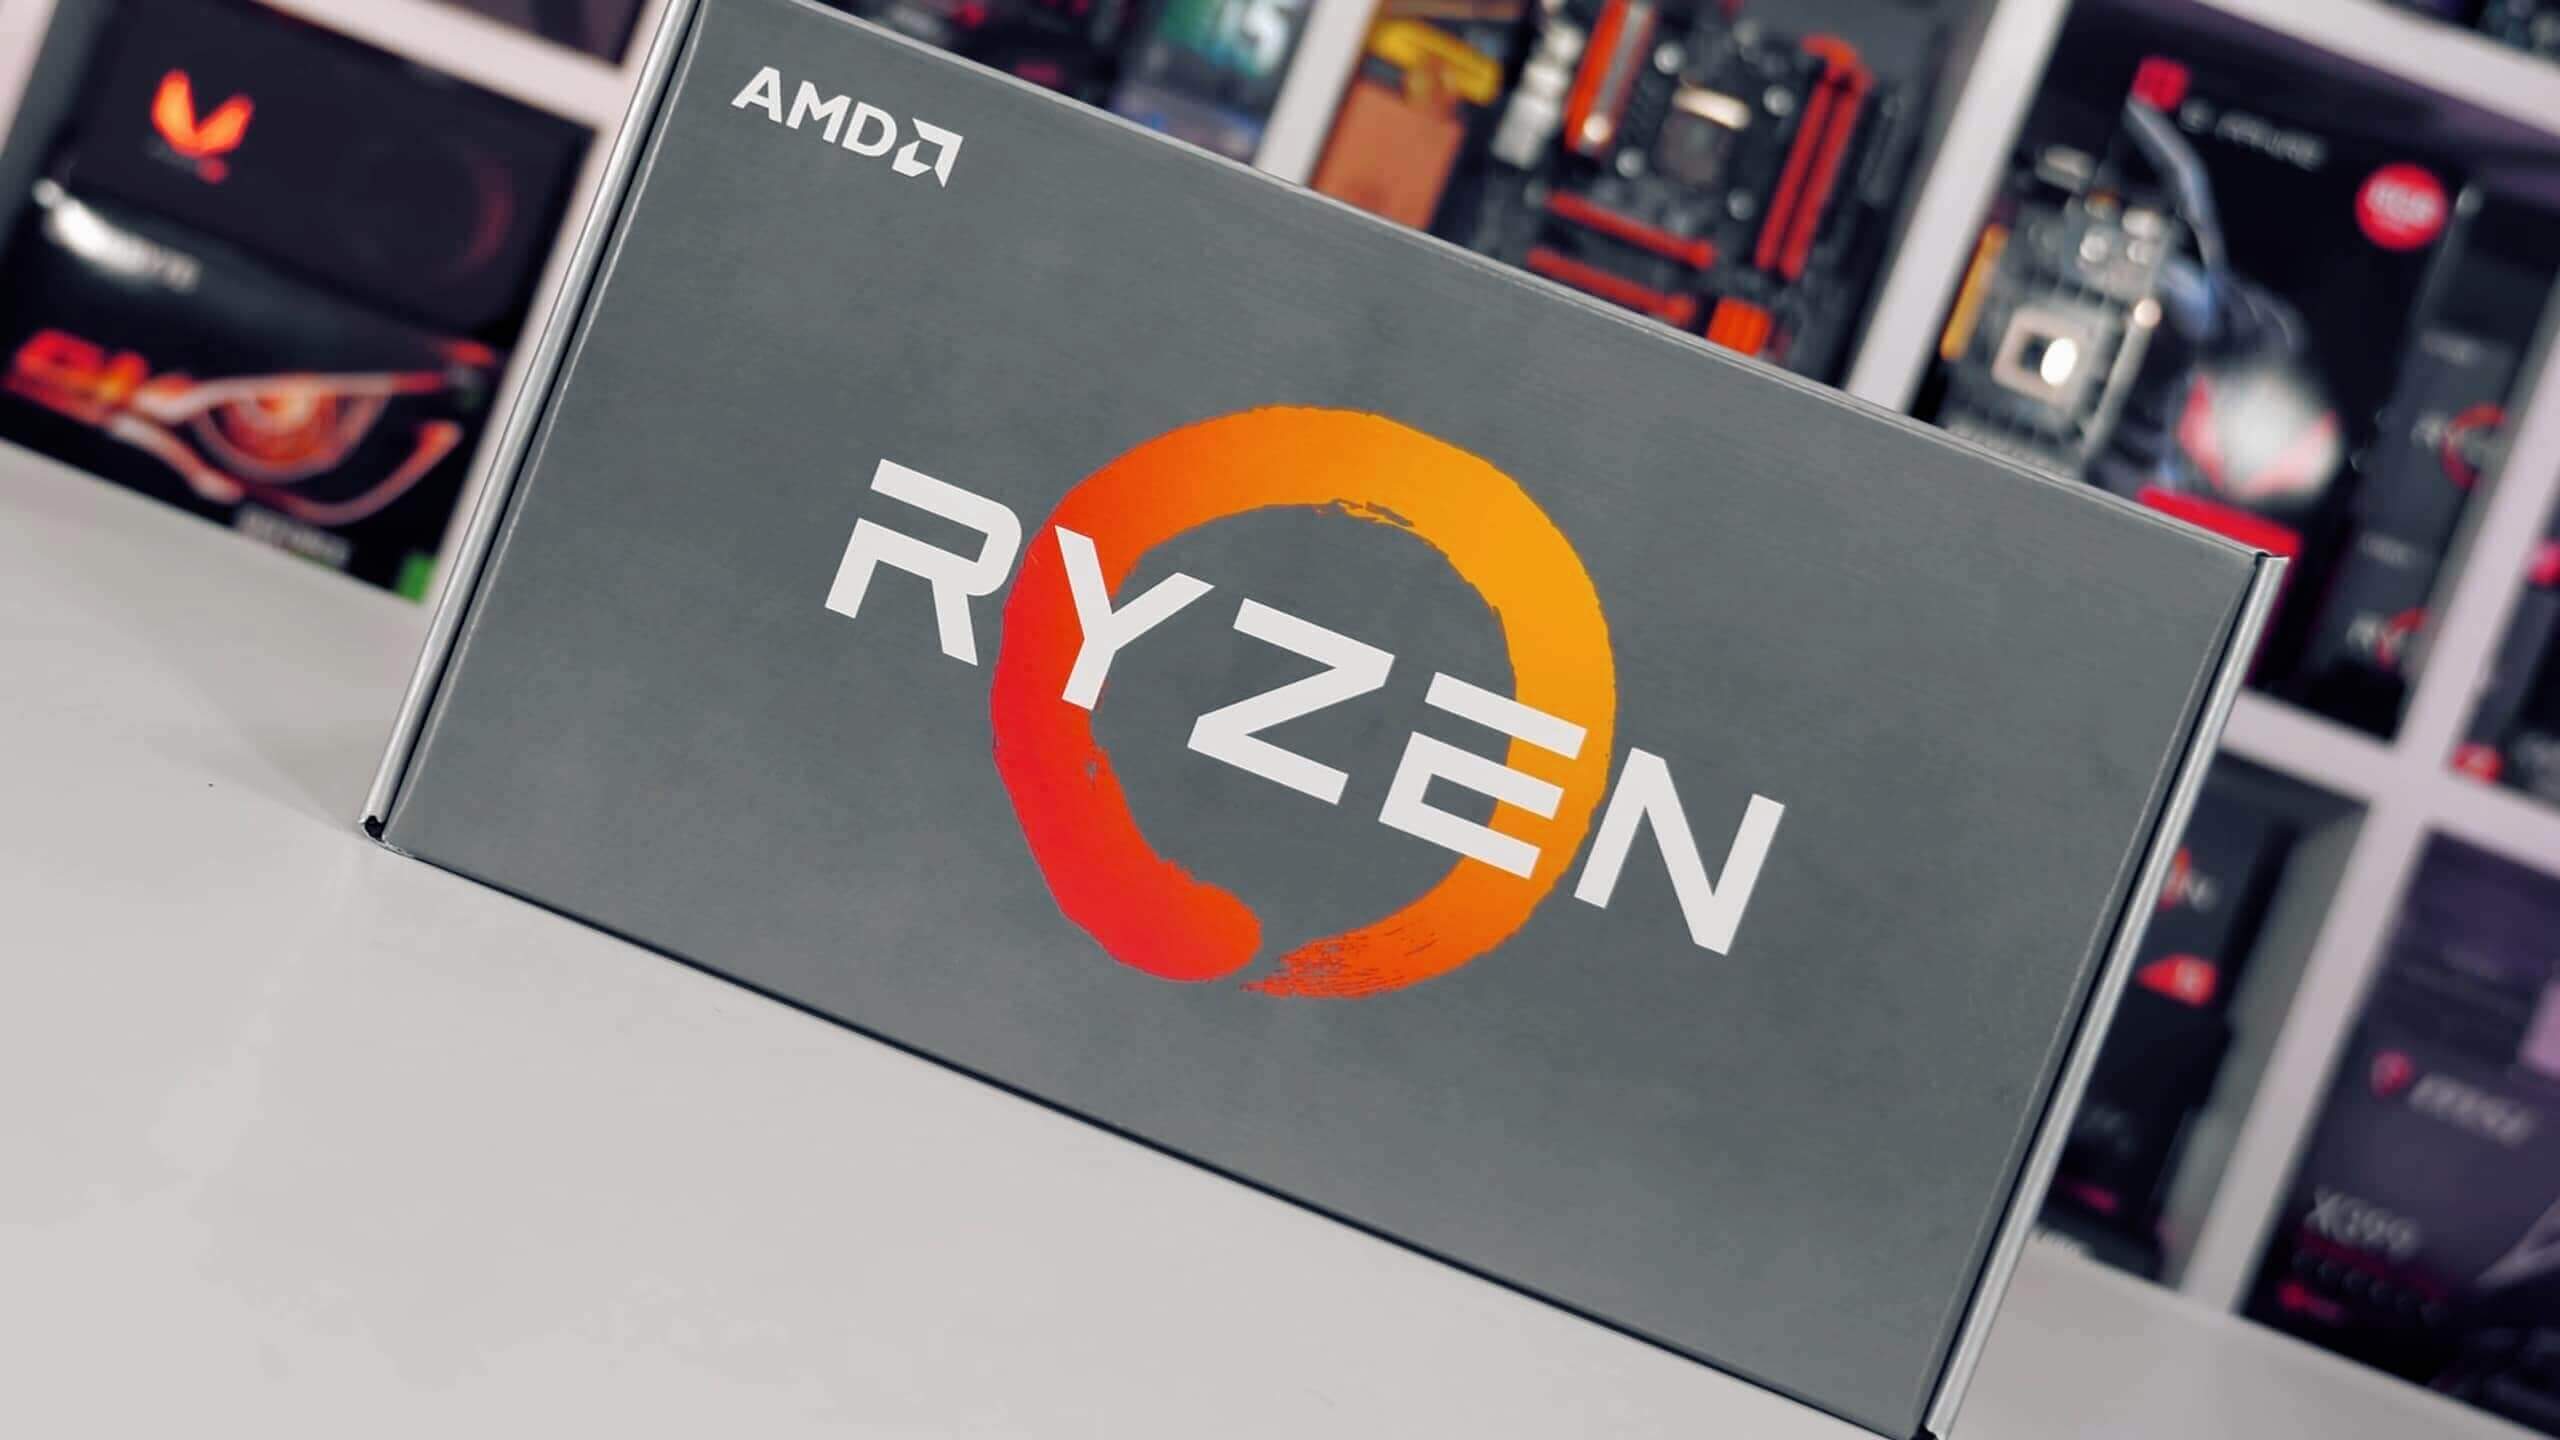 AMD announces Ryzen 3000XT desktop processors, launching next month starting at $249